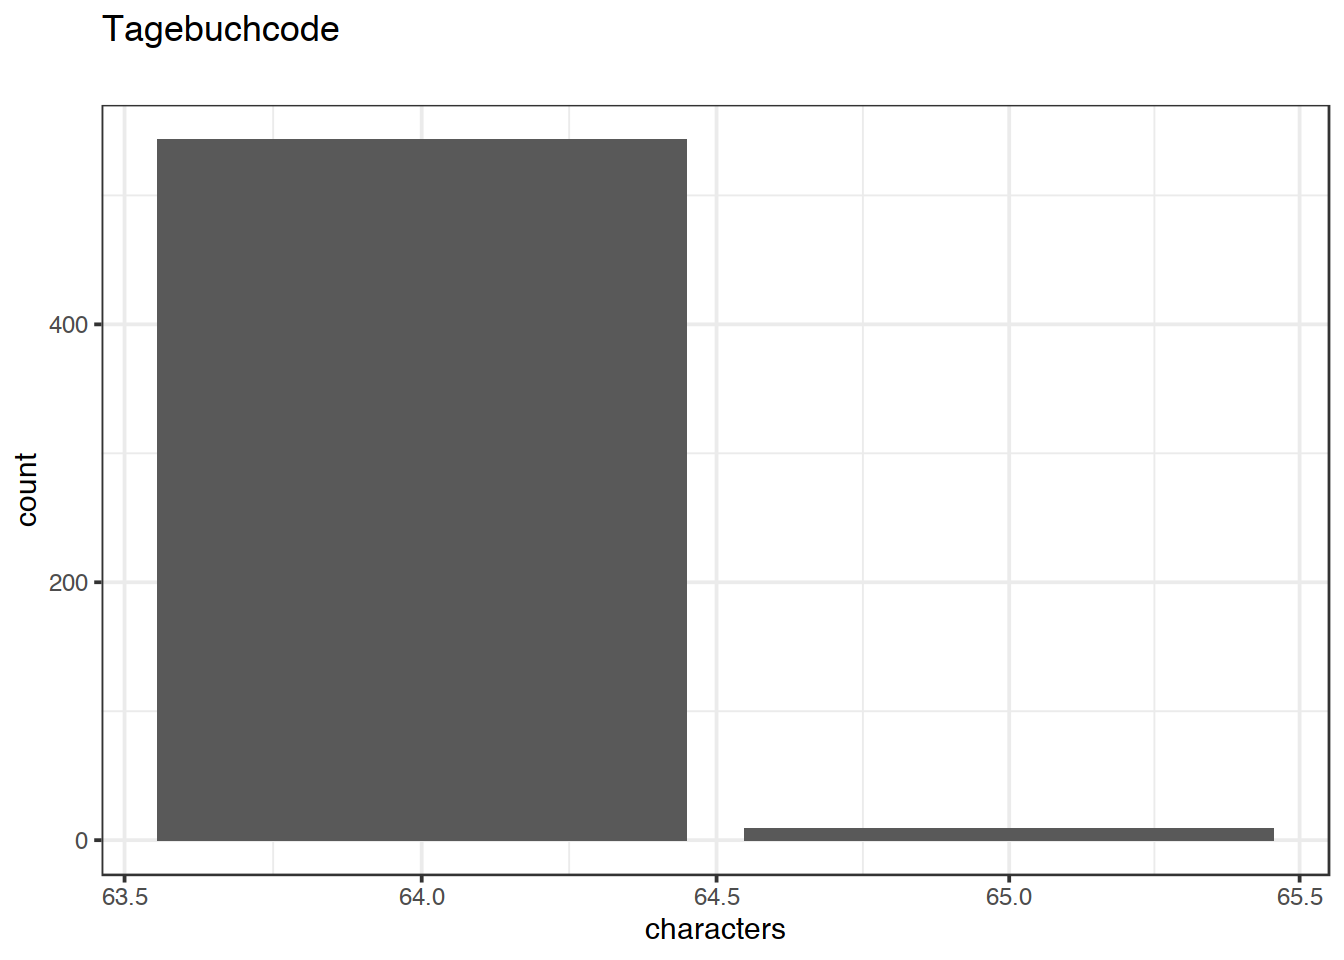 Distribution of values for Tagebuchcode